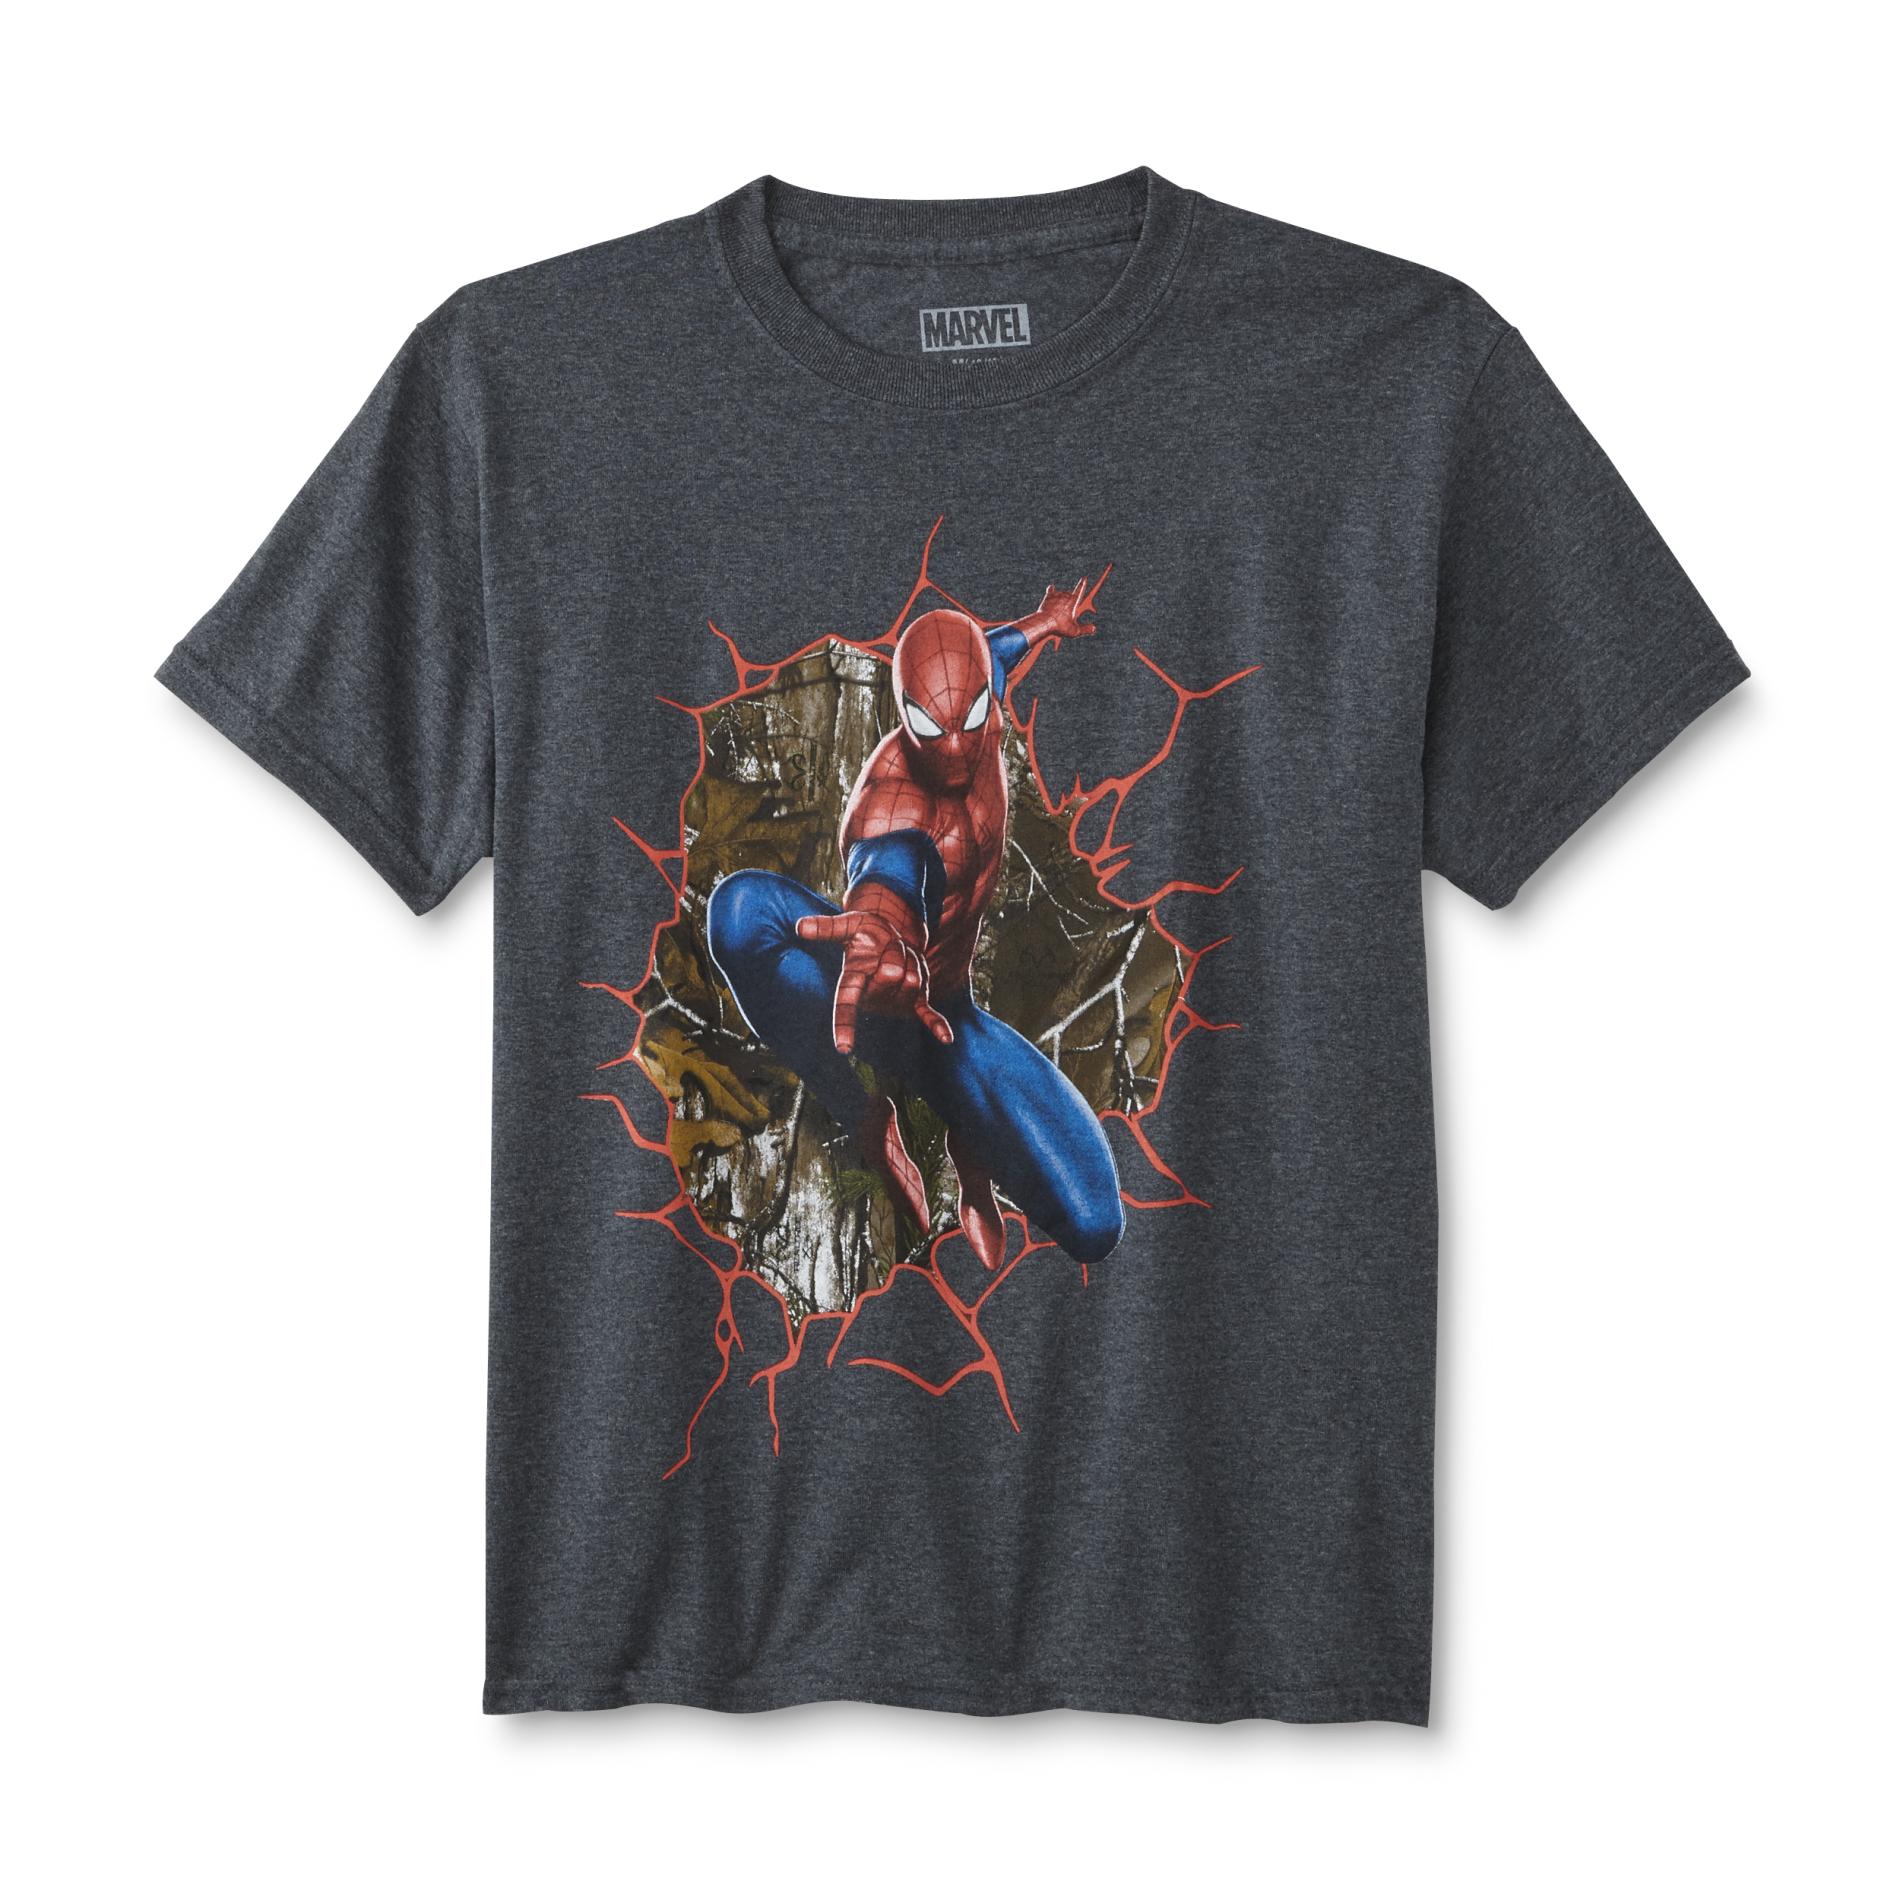 Marvel Spider-Man Boys' Graphic T-Shirt